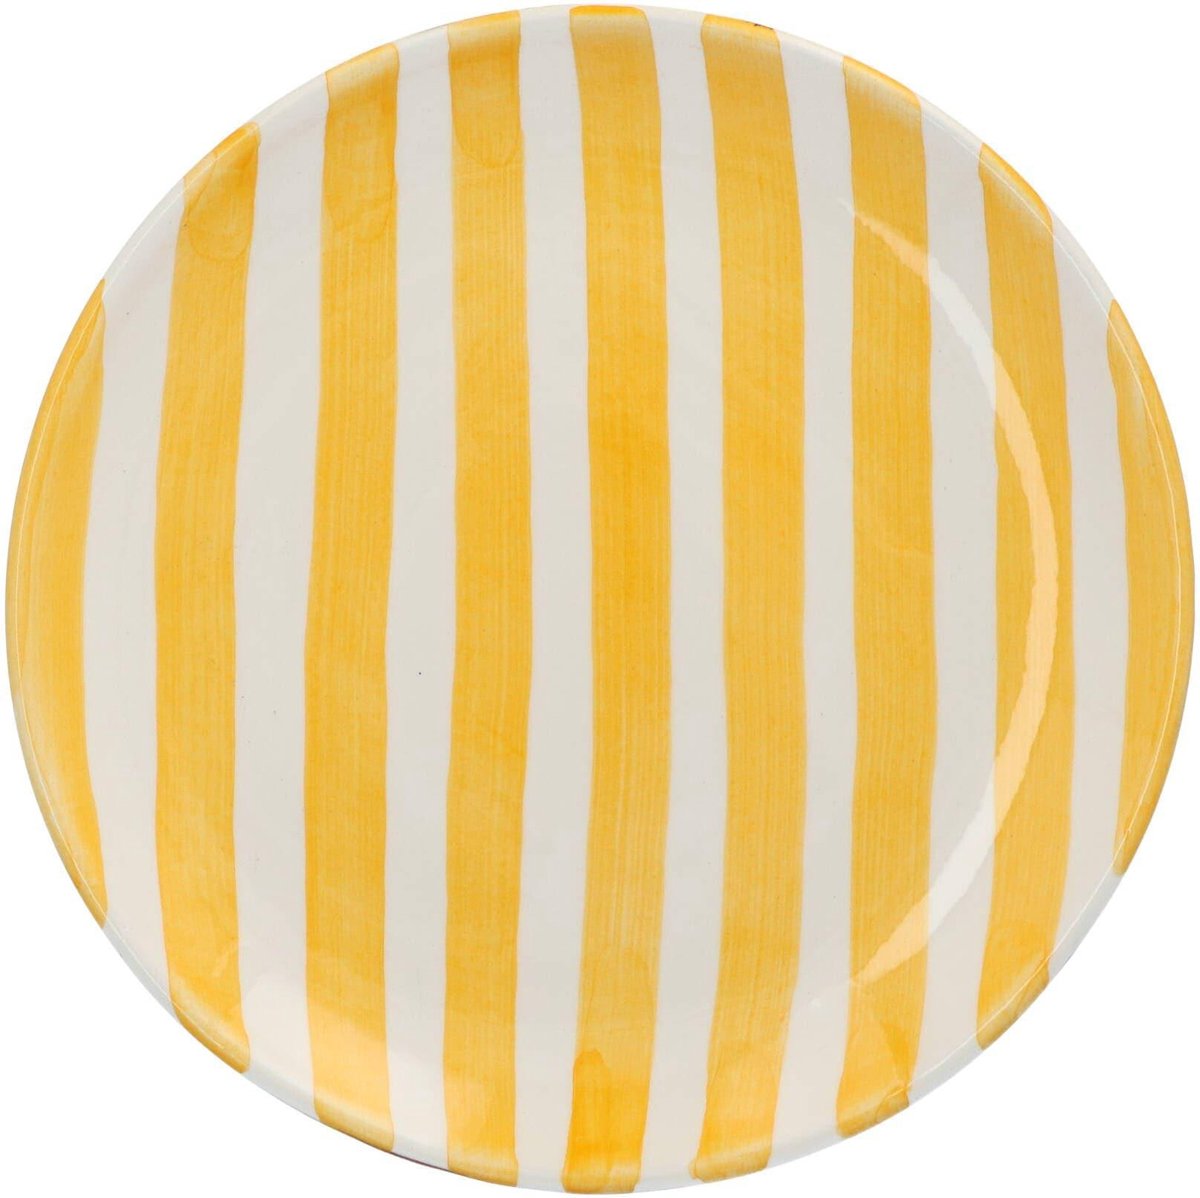 Casa Cubista - Ontbijtbord met streeppatroon geel 23cm - Kleine borden